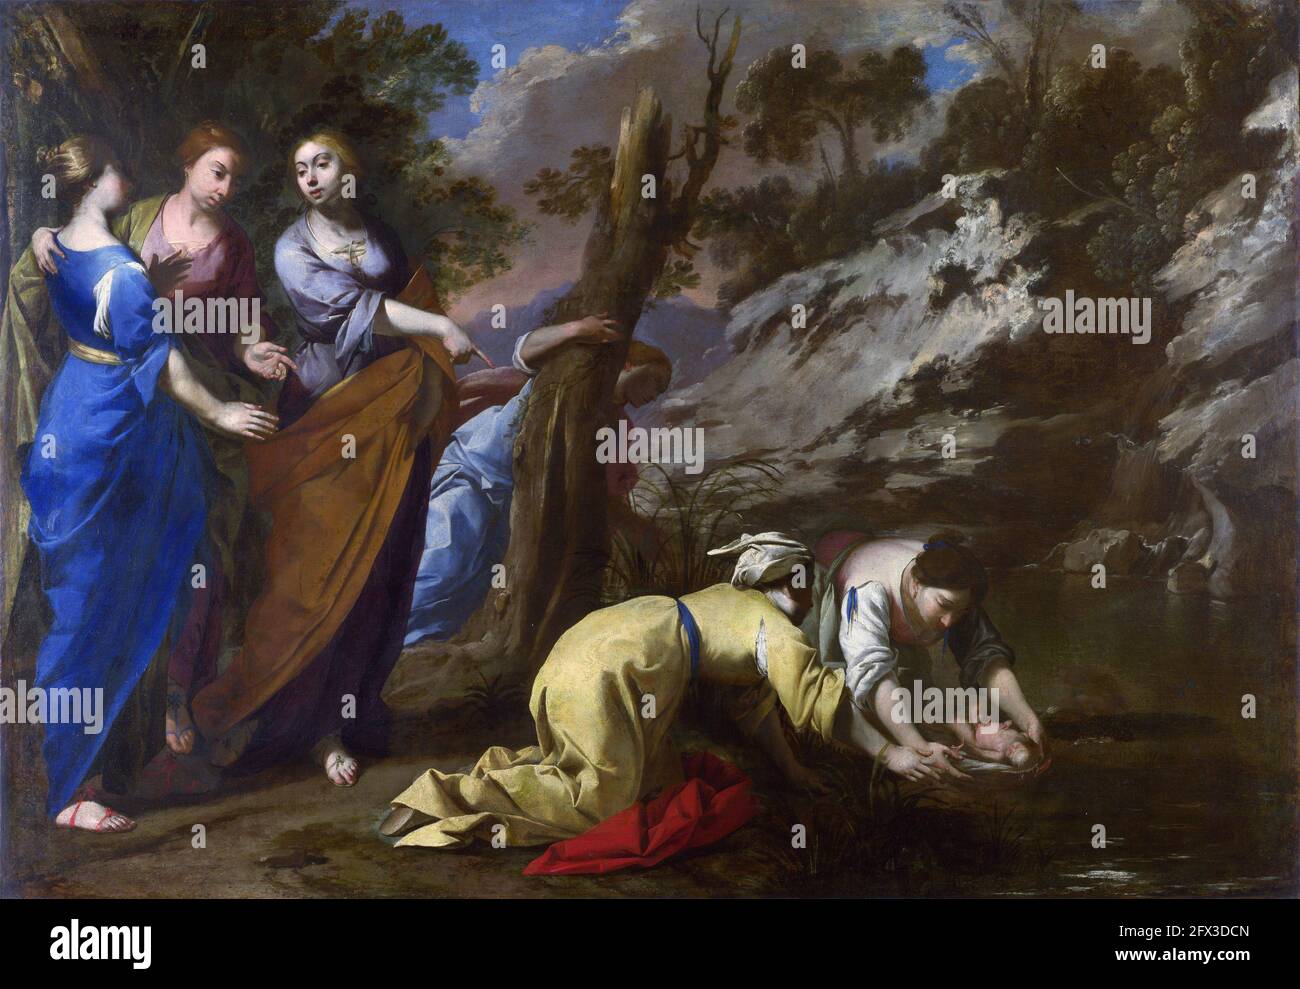 Antonio de Bellis. The Finding of Moses by Antonio de Bellis (c. 1616–c. 1656), oil on canvas, 1645-55 Stock Photo